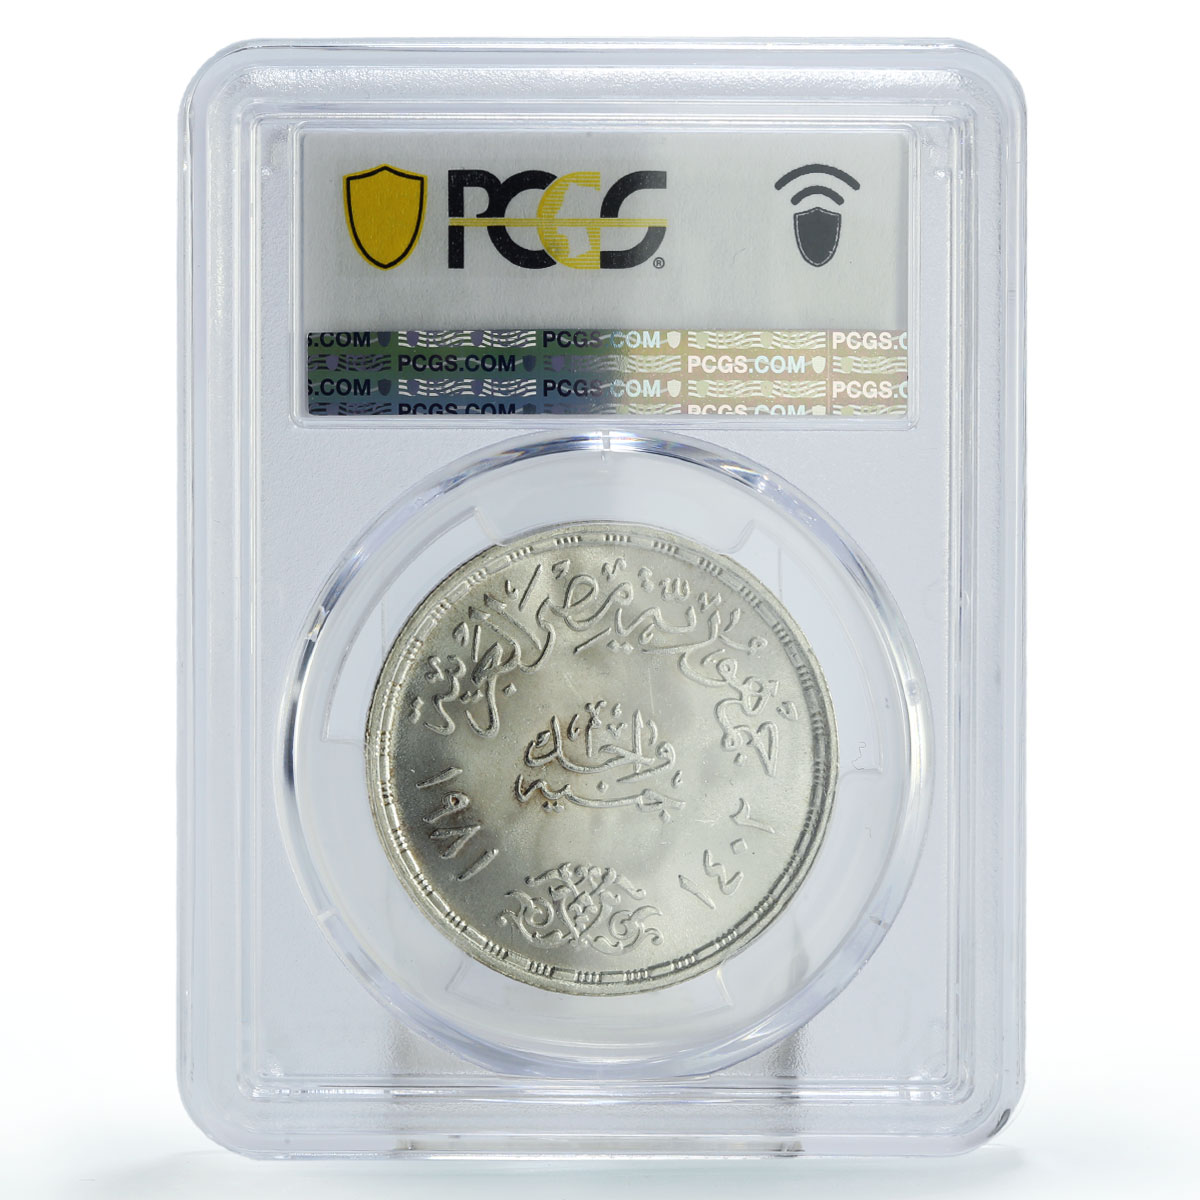 Egypt 1 pound Oraby Revolution Arabi Pasha Revolt MS66 PCGS silver coin 1981